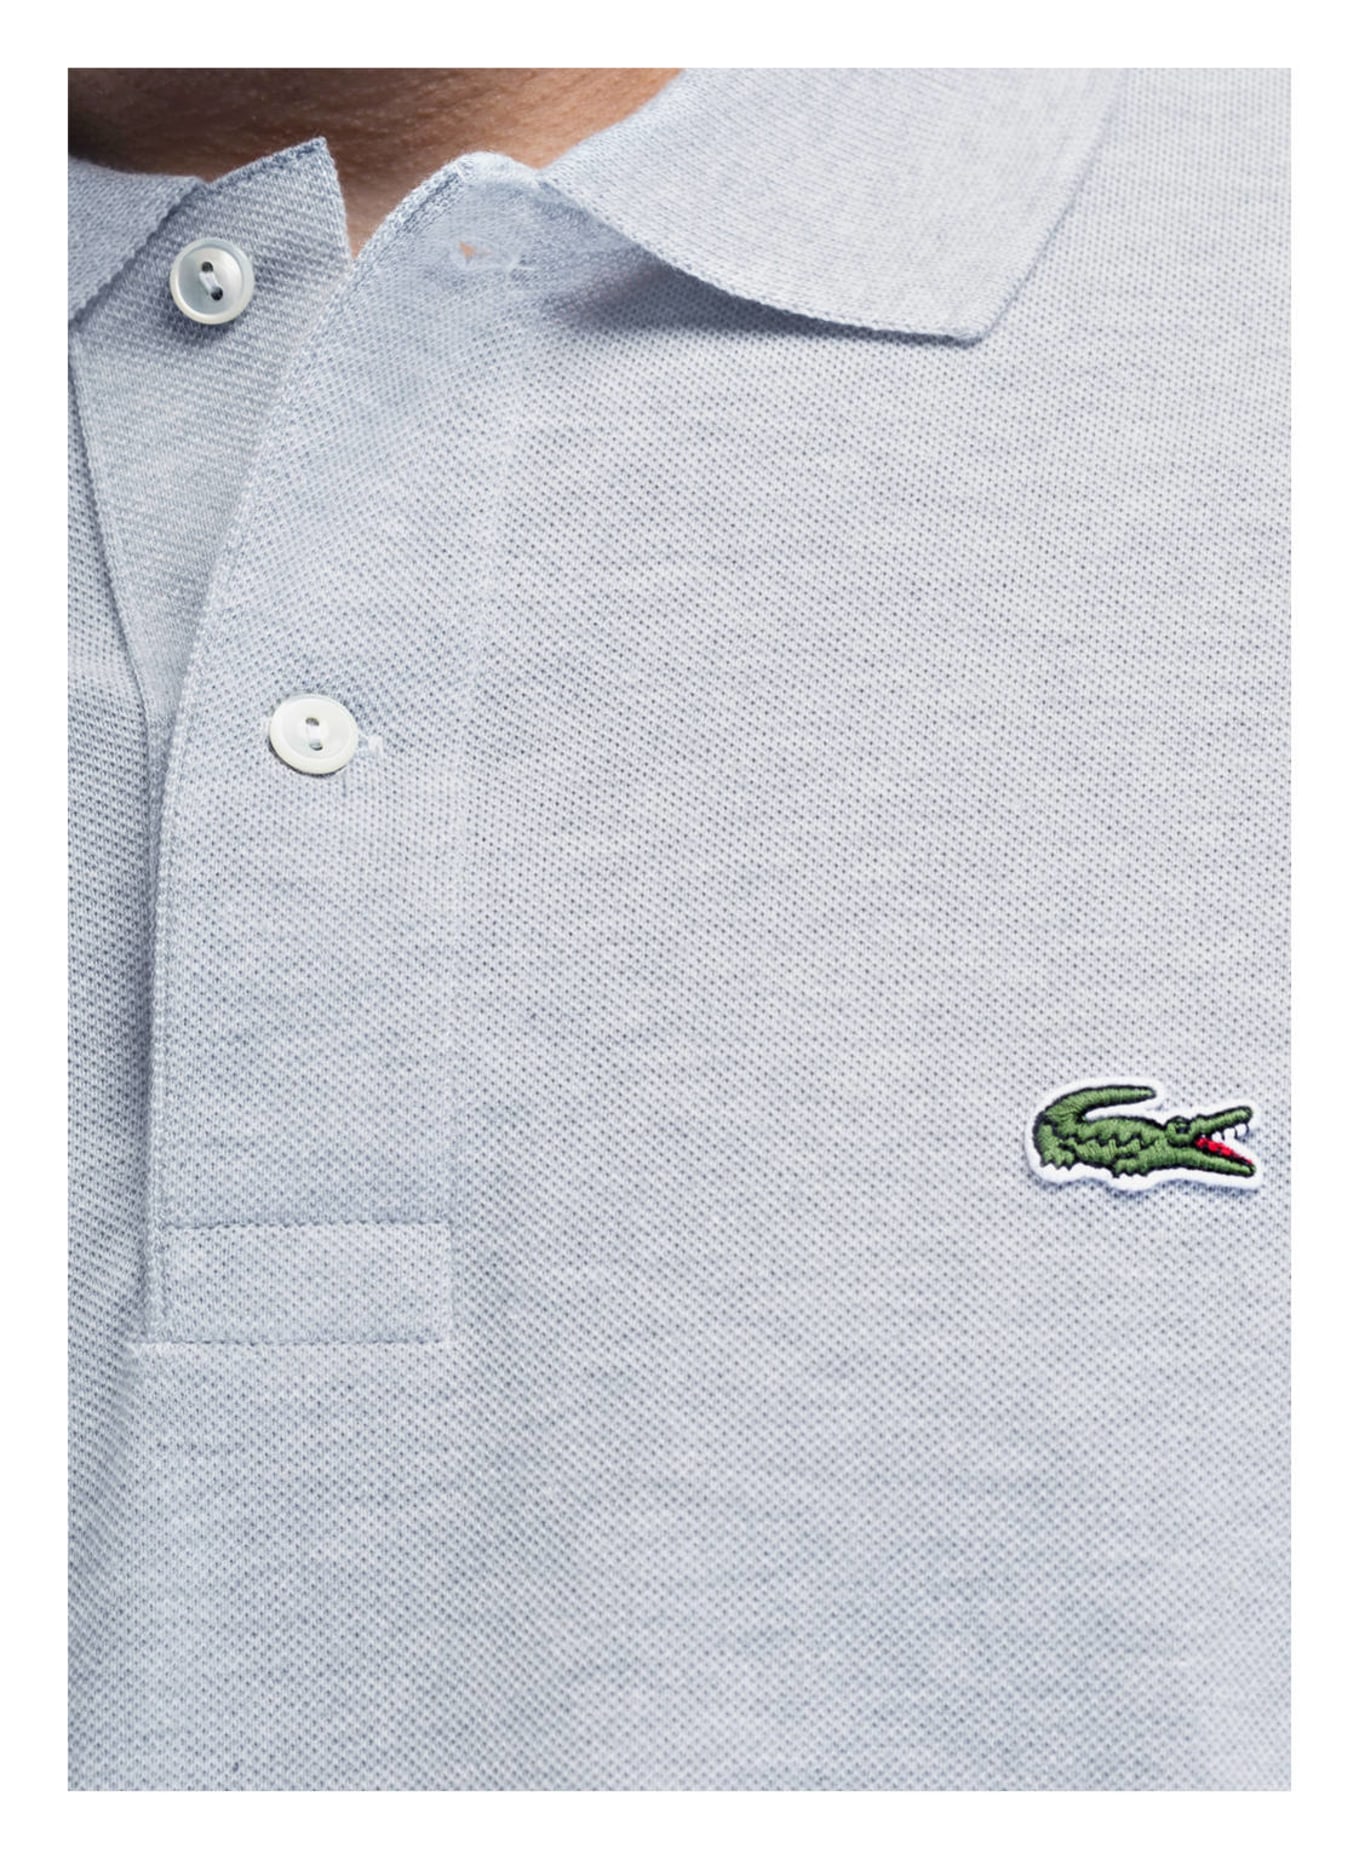 LACOSTE Piqué-Poloshirt Classic Fit, Farbe: HELLGRAU MELIERT (Bild 4)